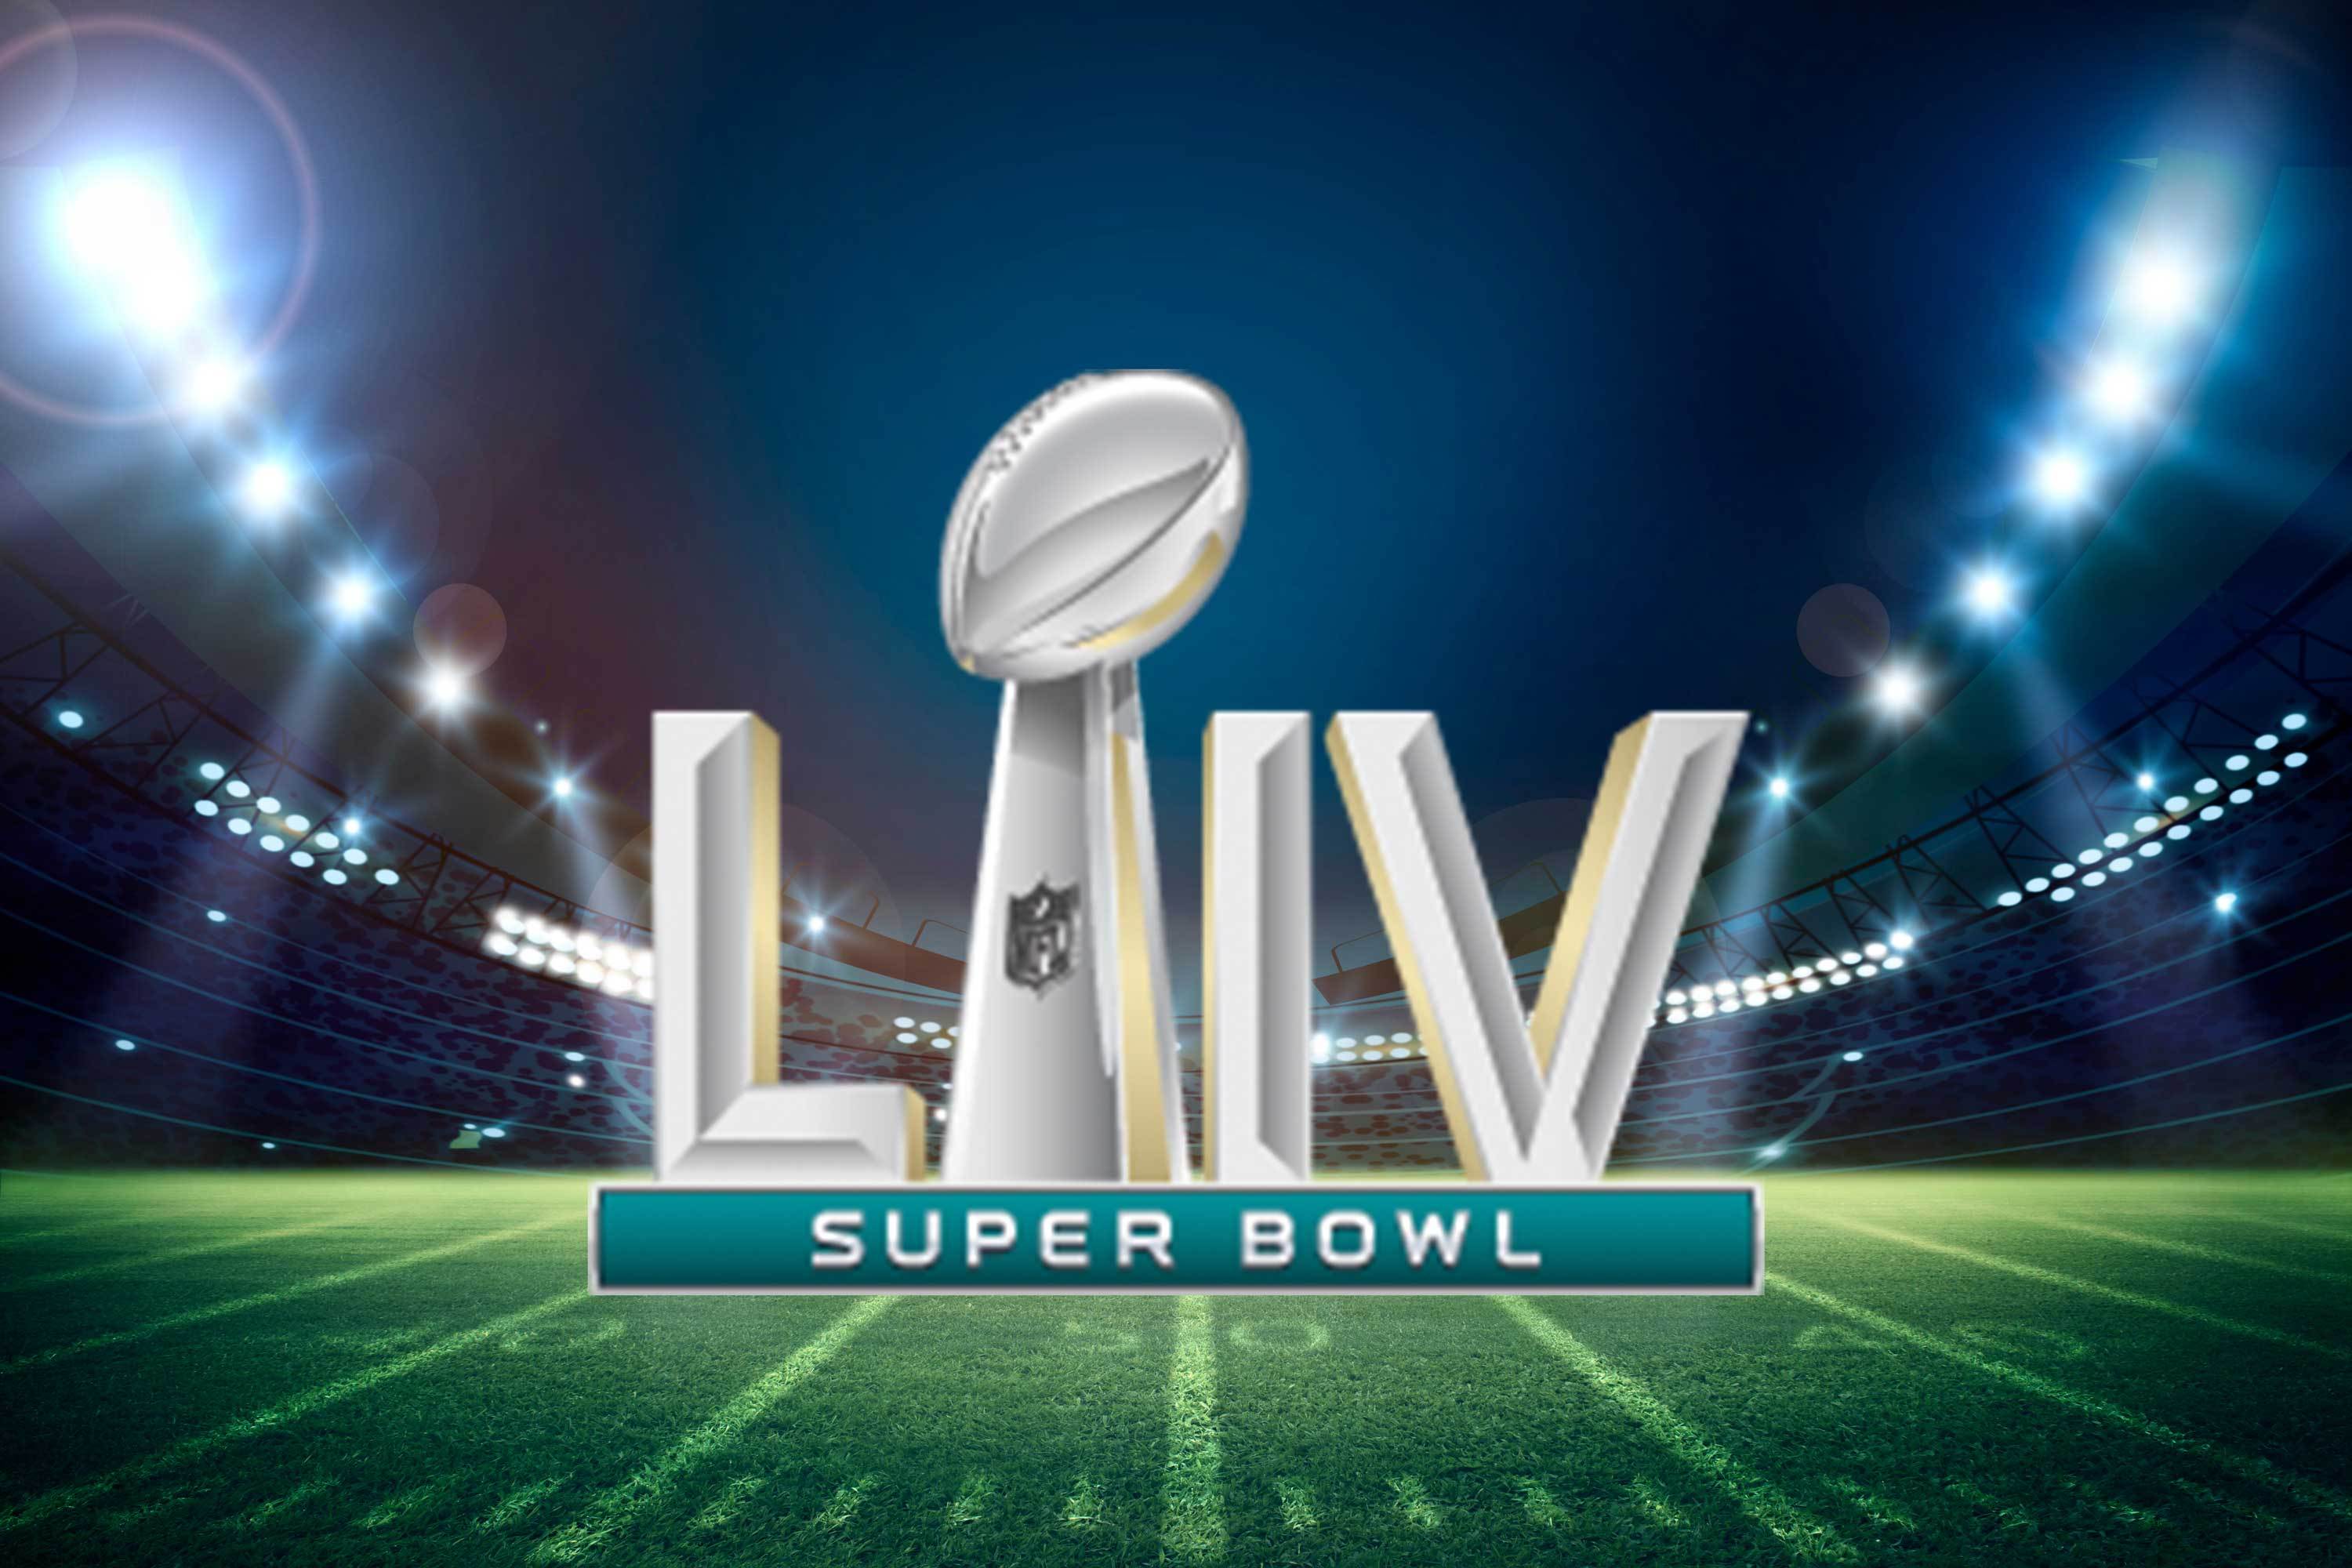 Super bowl show. Super Bowl. Супербол 2022. Super Bowl Halftime show. Супербоул Кубок.